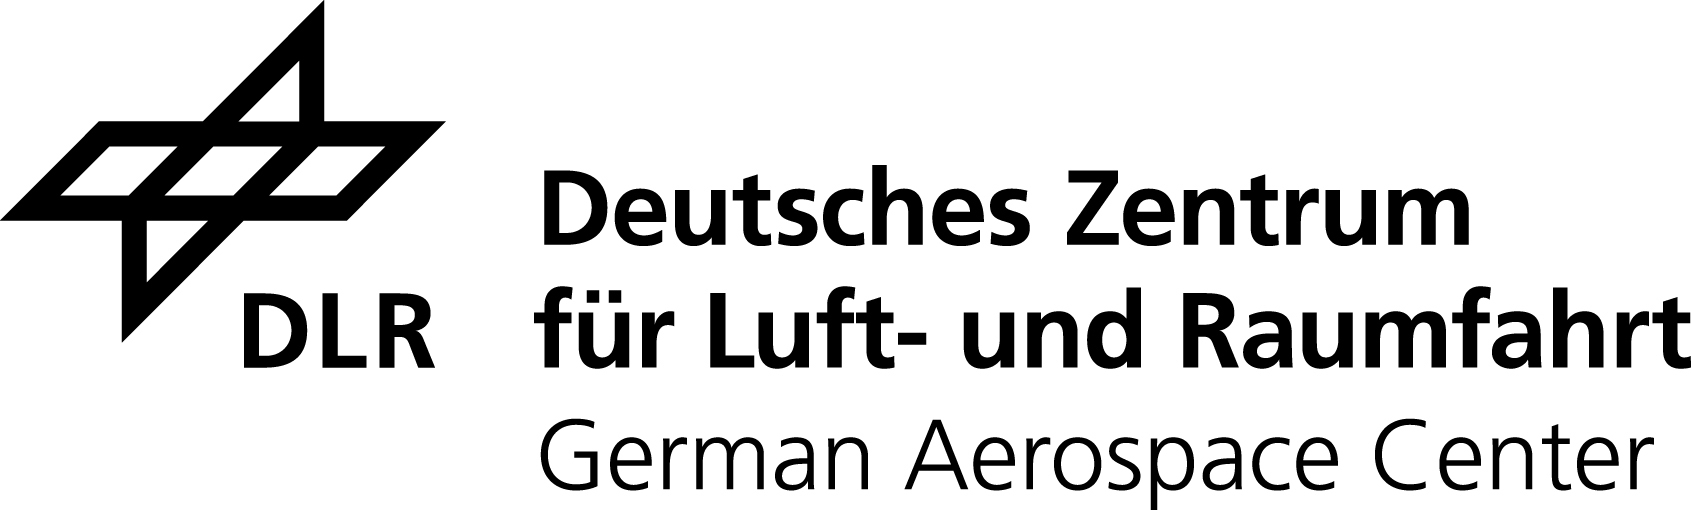 6 DLR german aerospace center